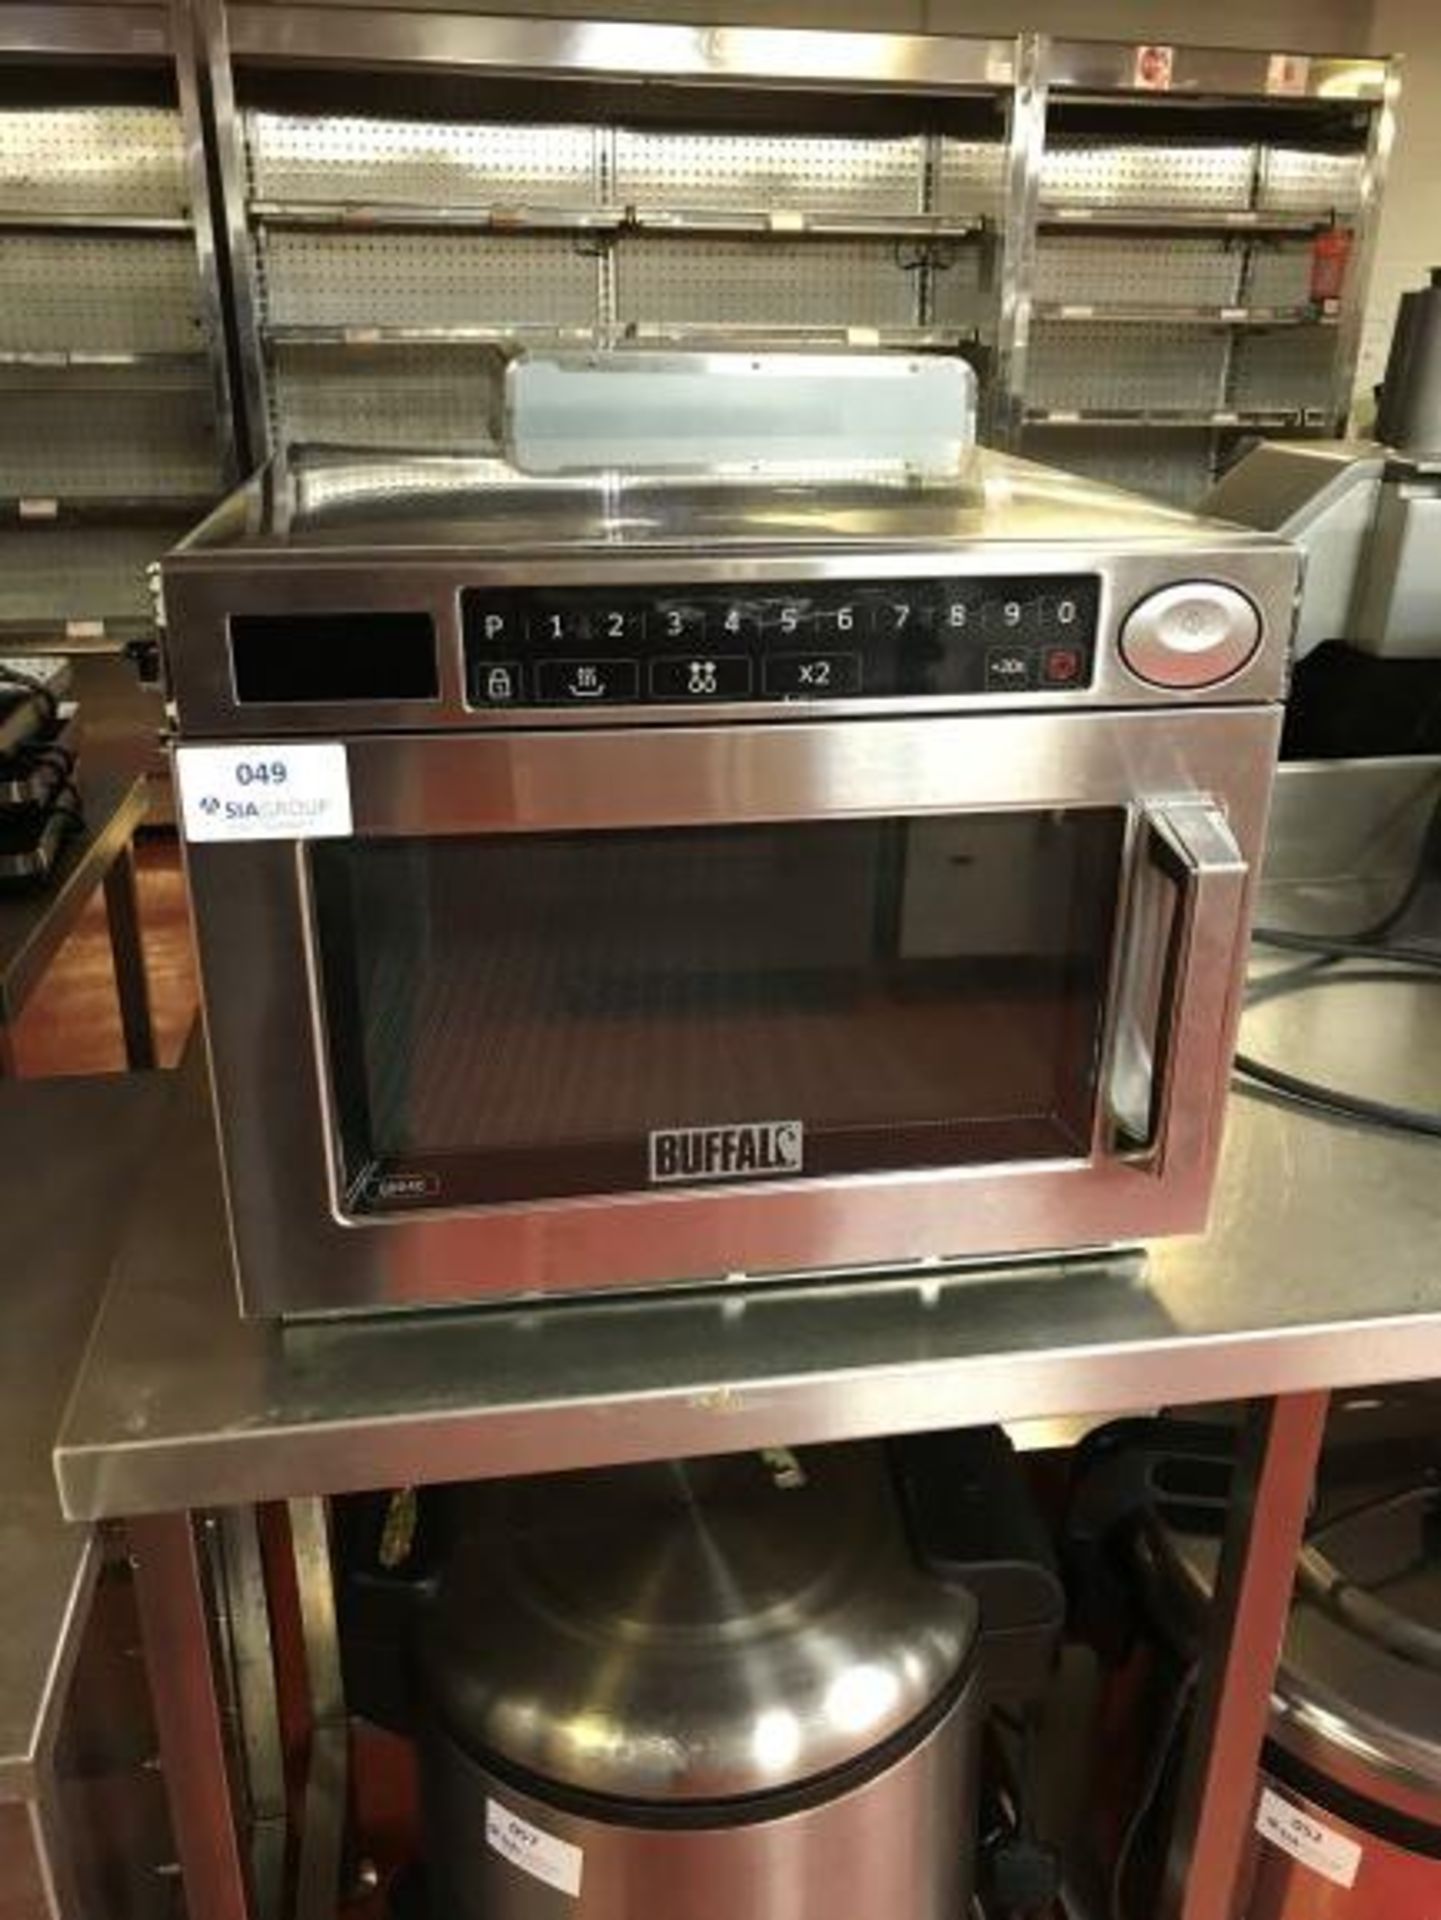 Buffalo GK640 26 Litre programmable commercial stainless steel oven